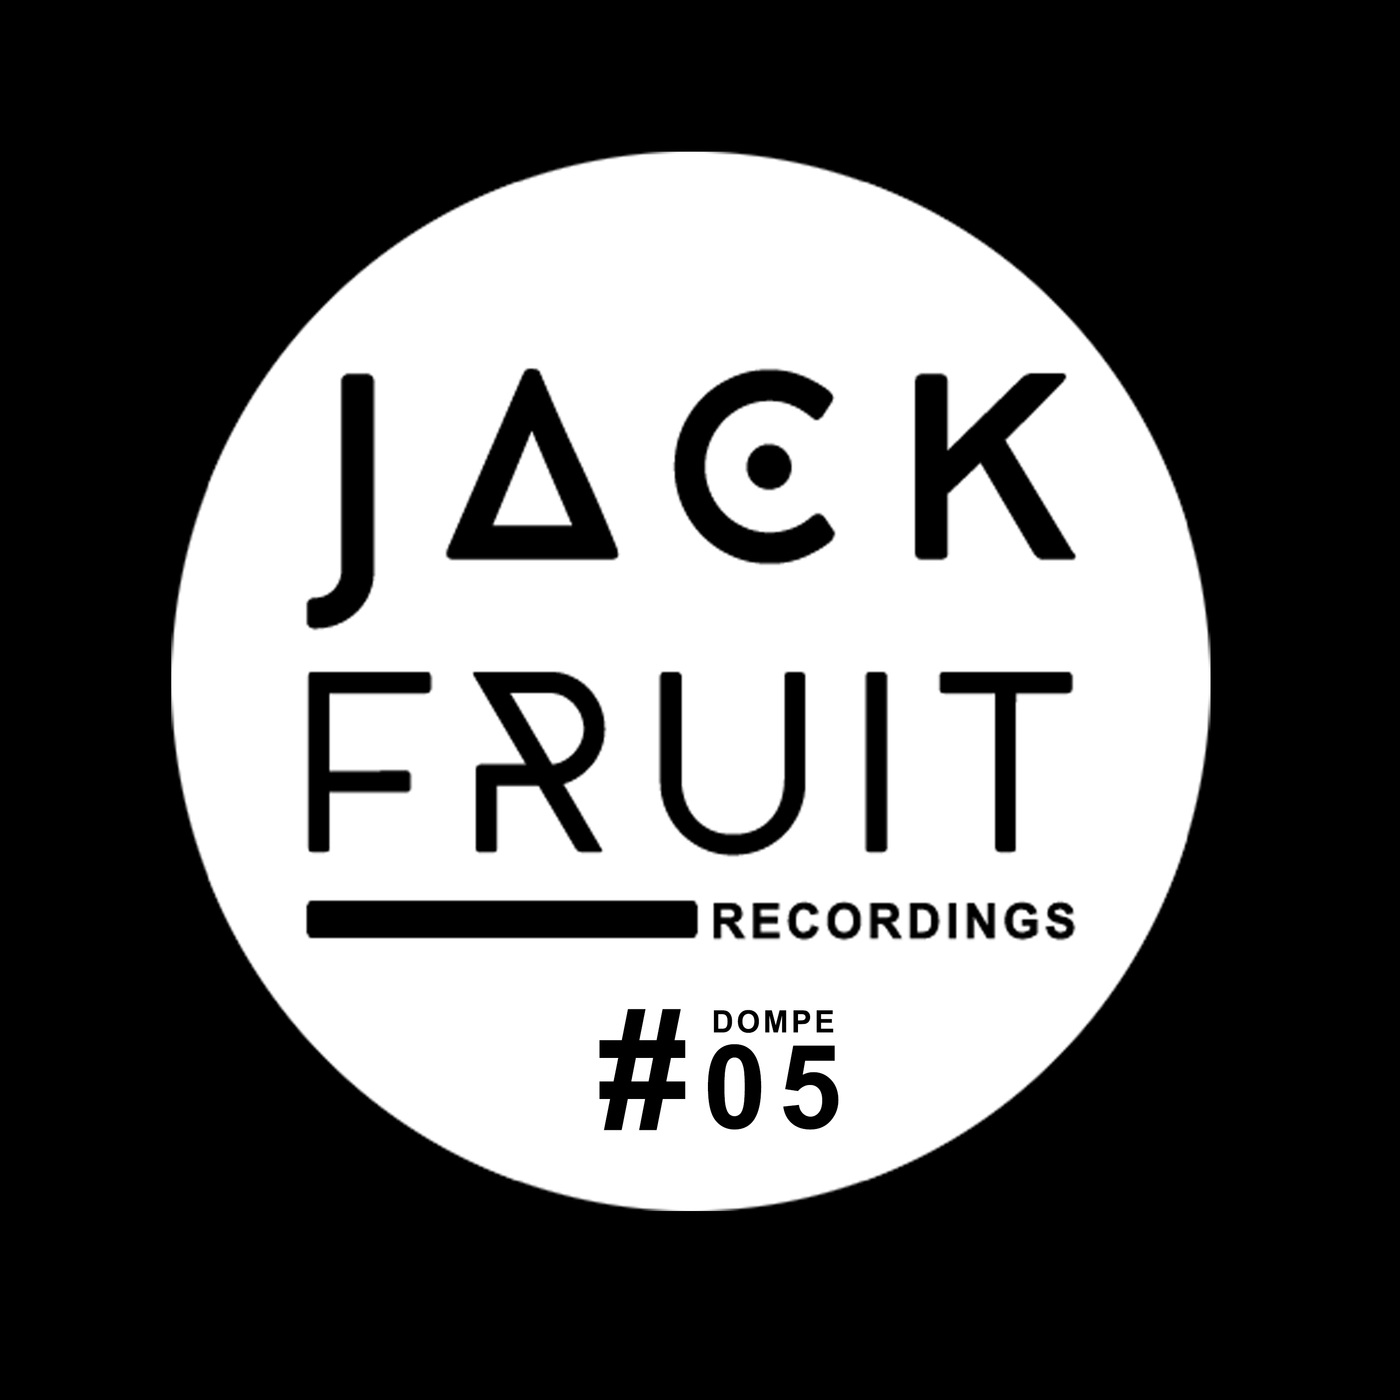 Dompe - Bird / Jackfruit Recordings